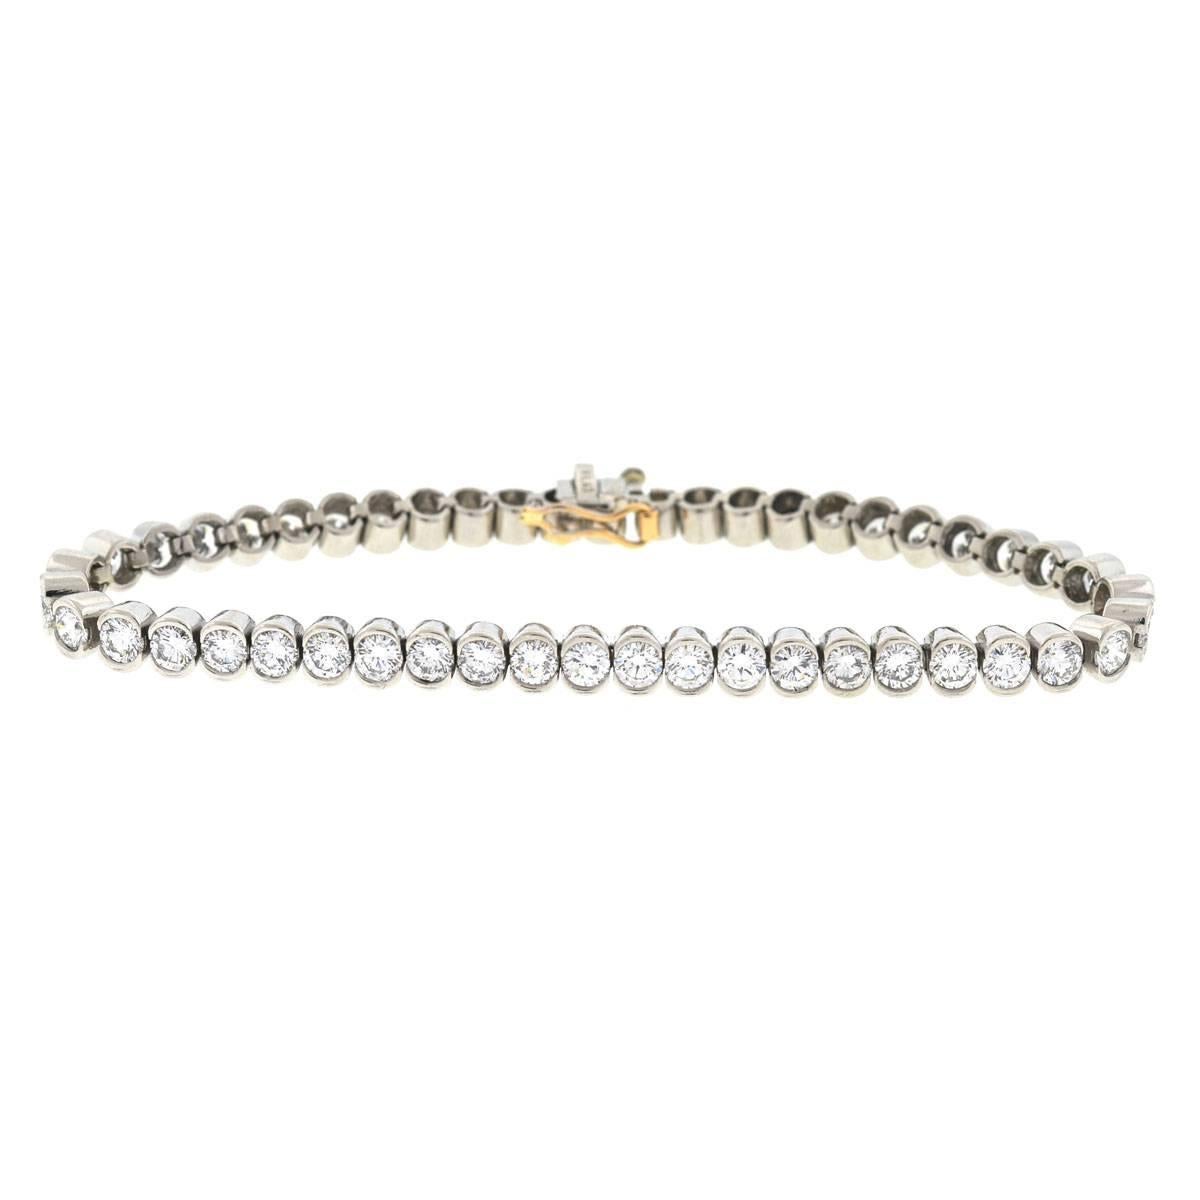 9.5 carat diamond tennis bracelet